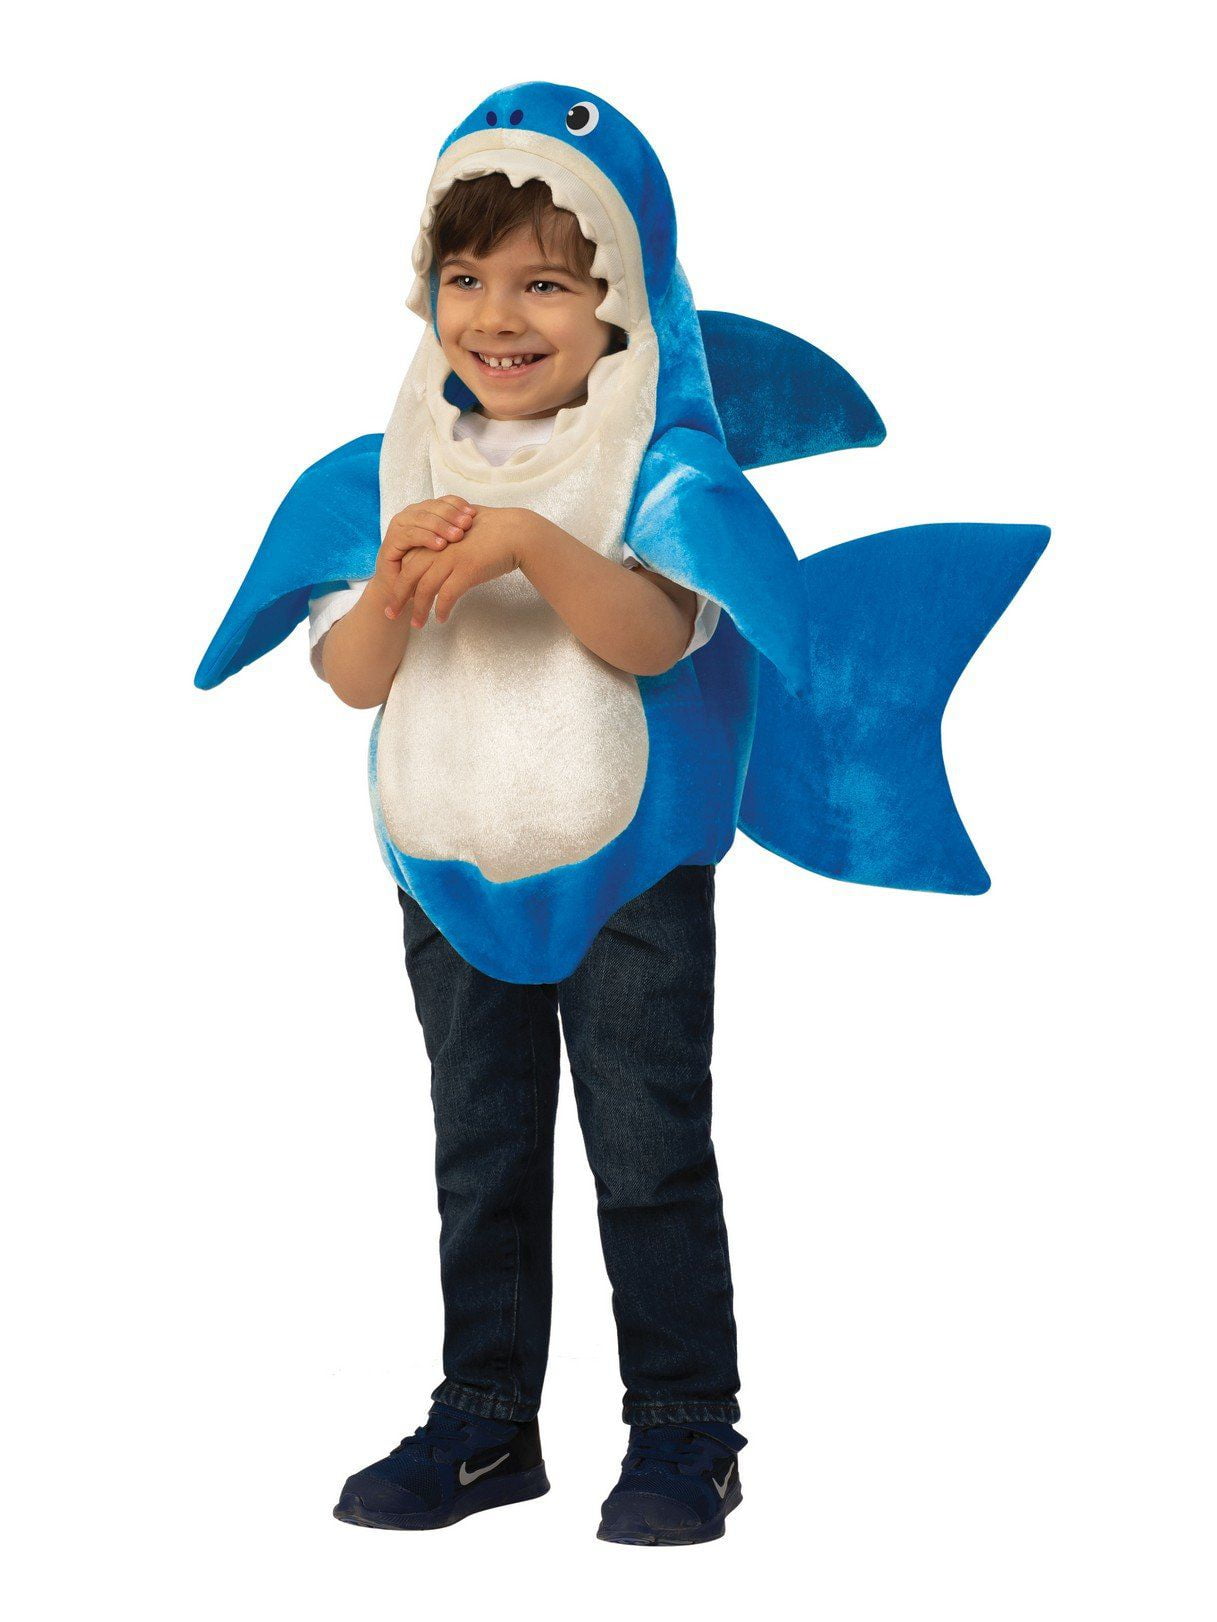 Baby Shark - Daddy Shark Kids Costume - Walmart.com - Walmart.com